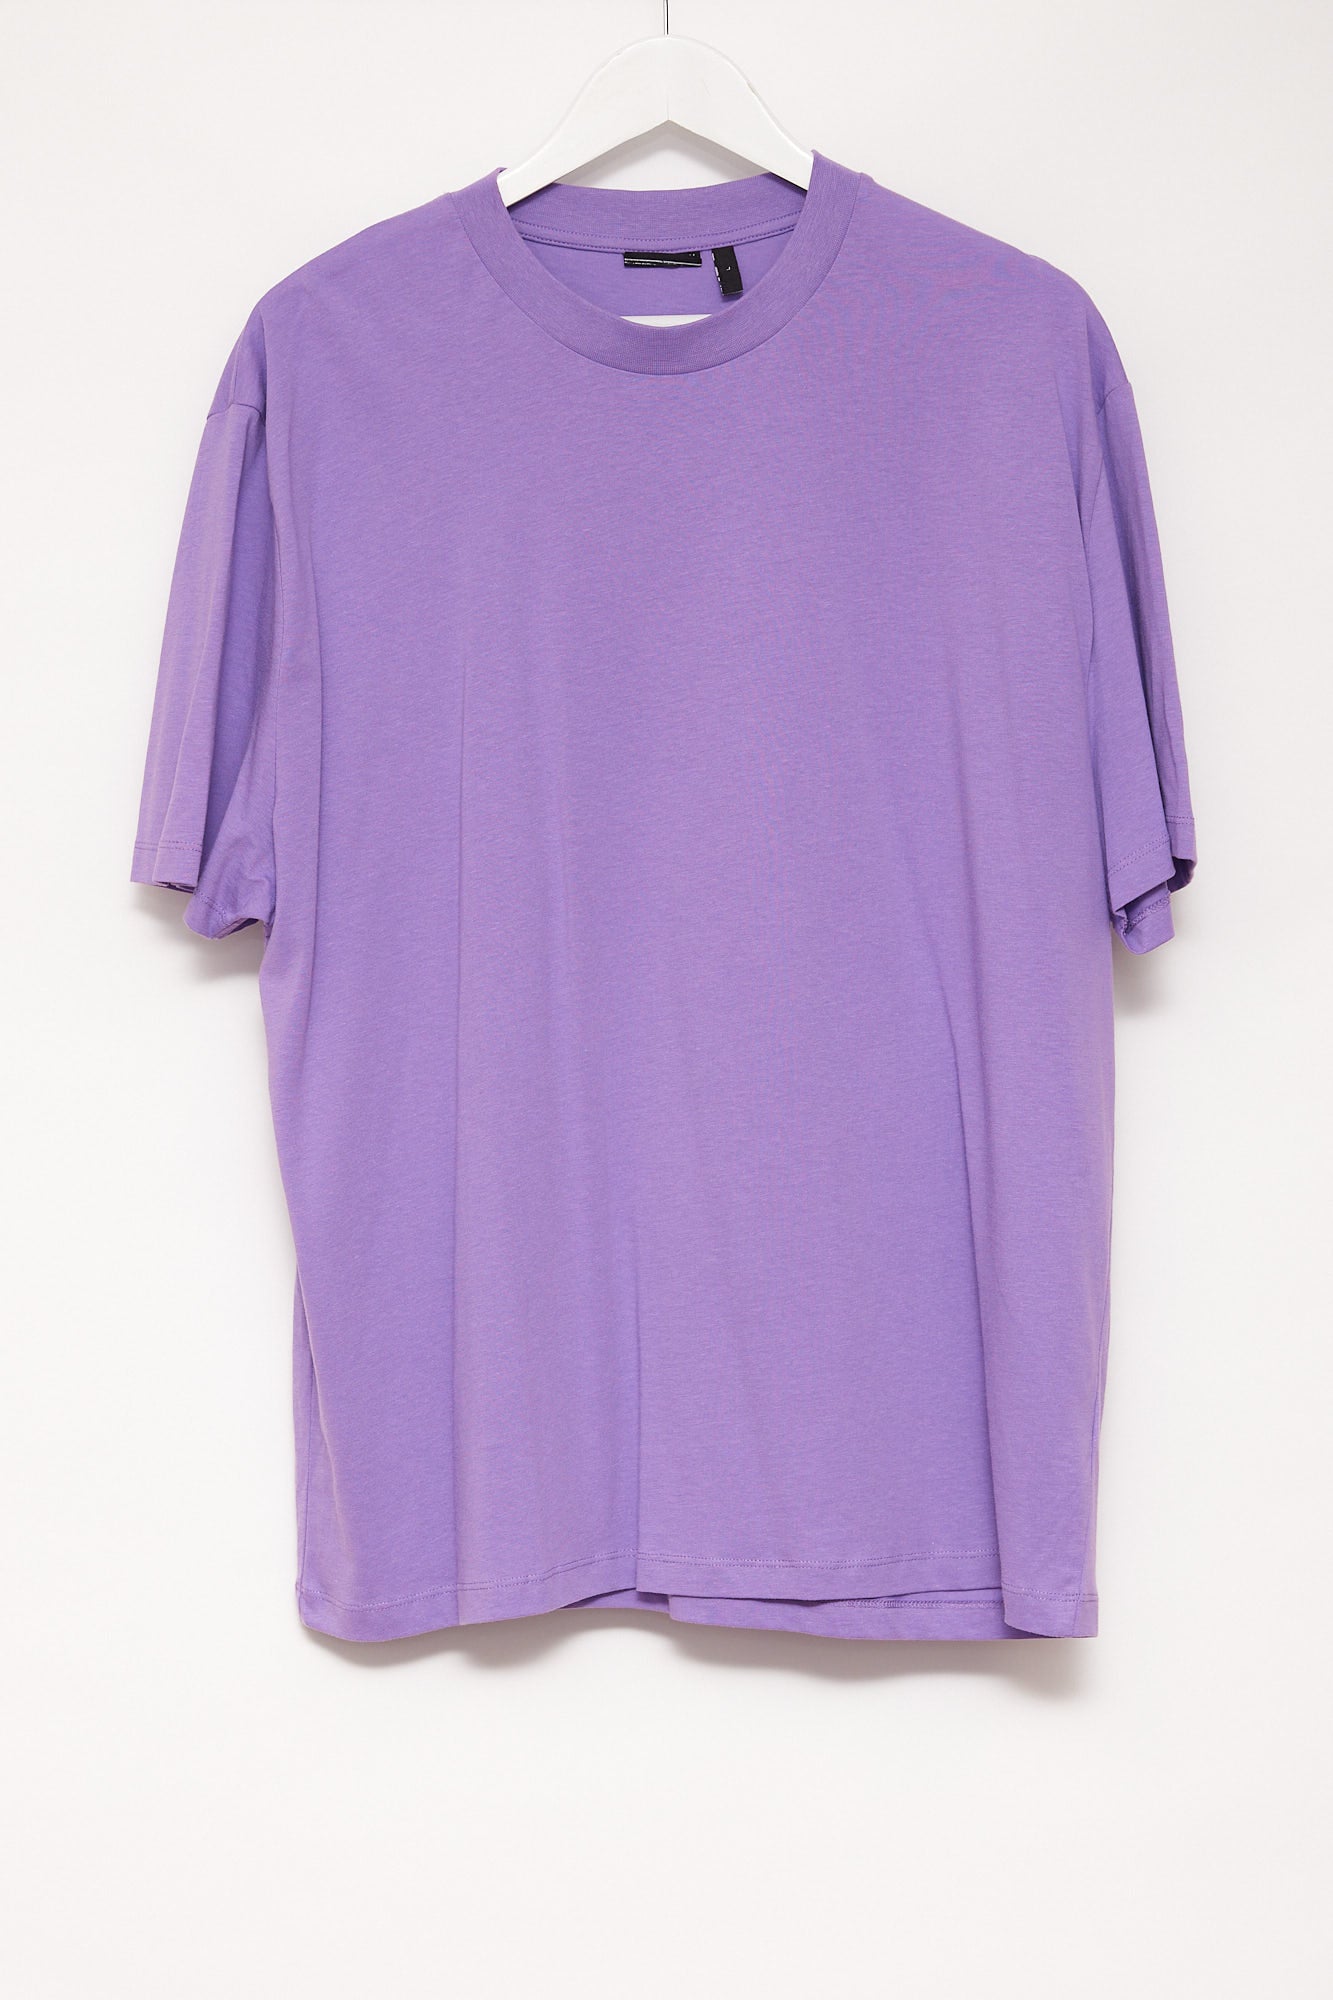 Mens ASOS Purple Oversized T-shirt Size Large